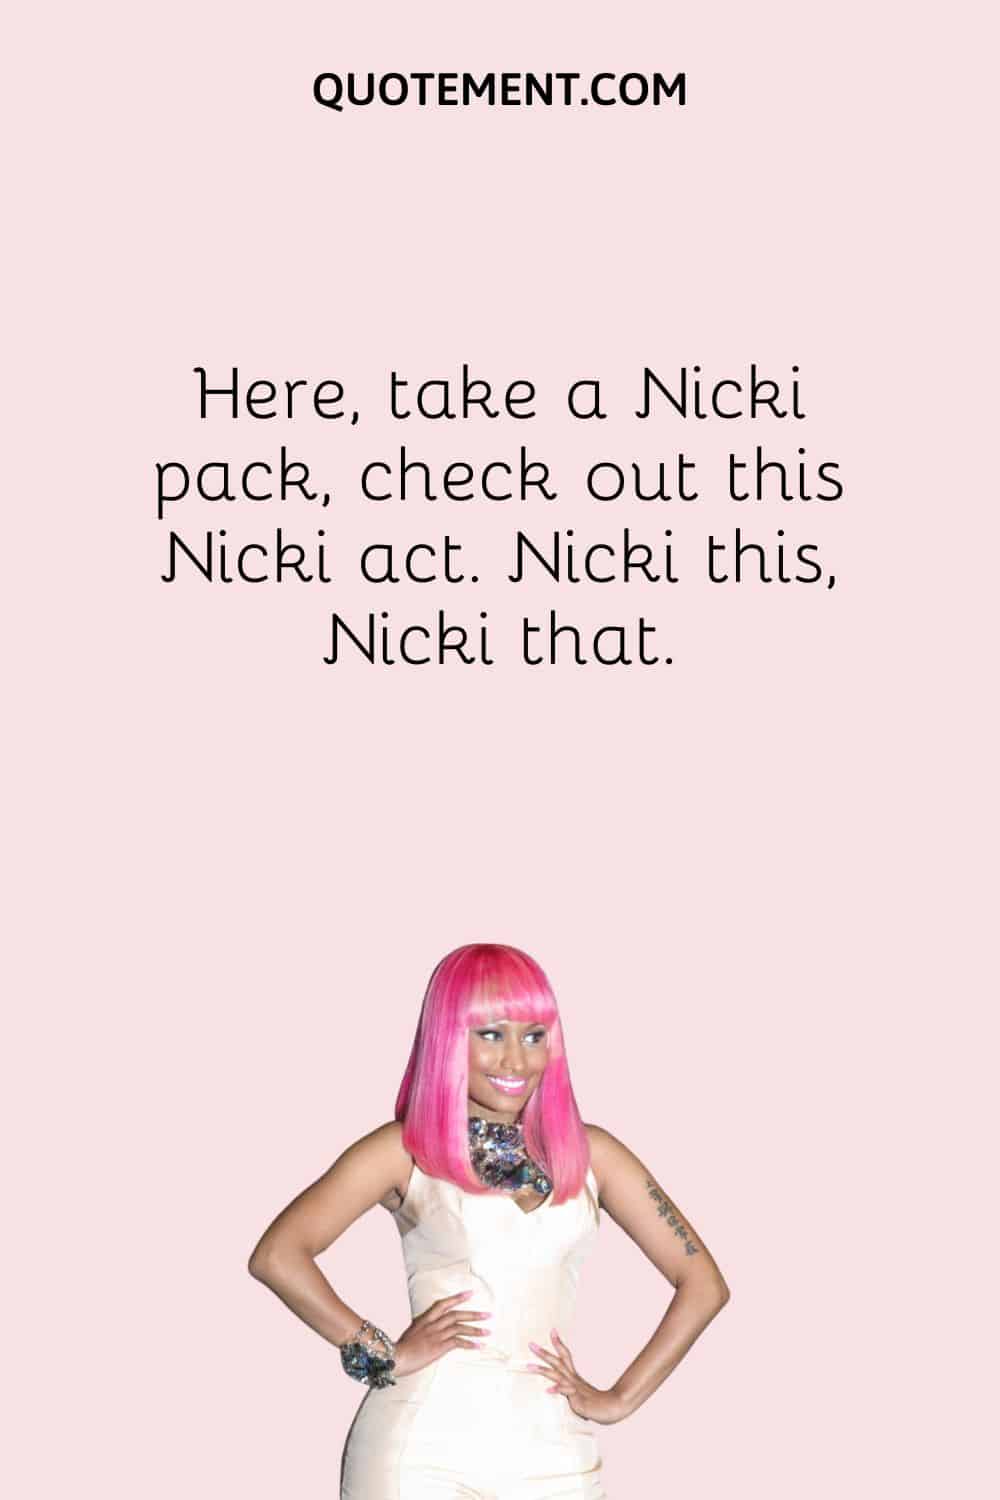 Here, take a Nicki pack, check out this Nicki act. Nicki this, Nicki that